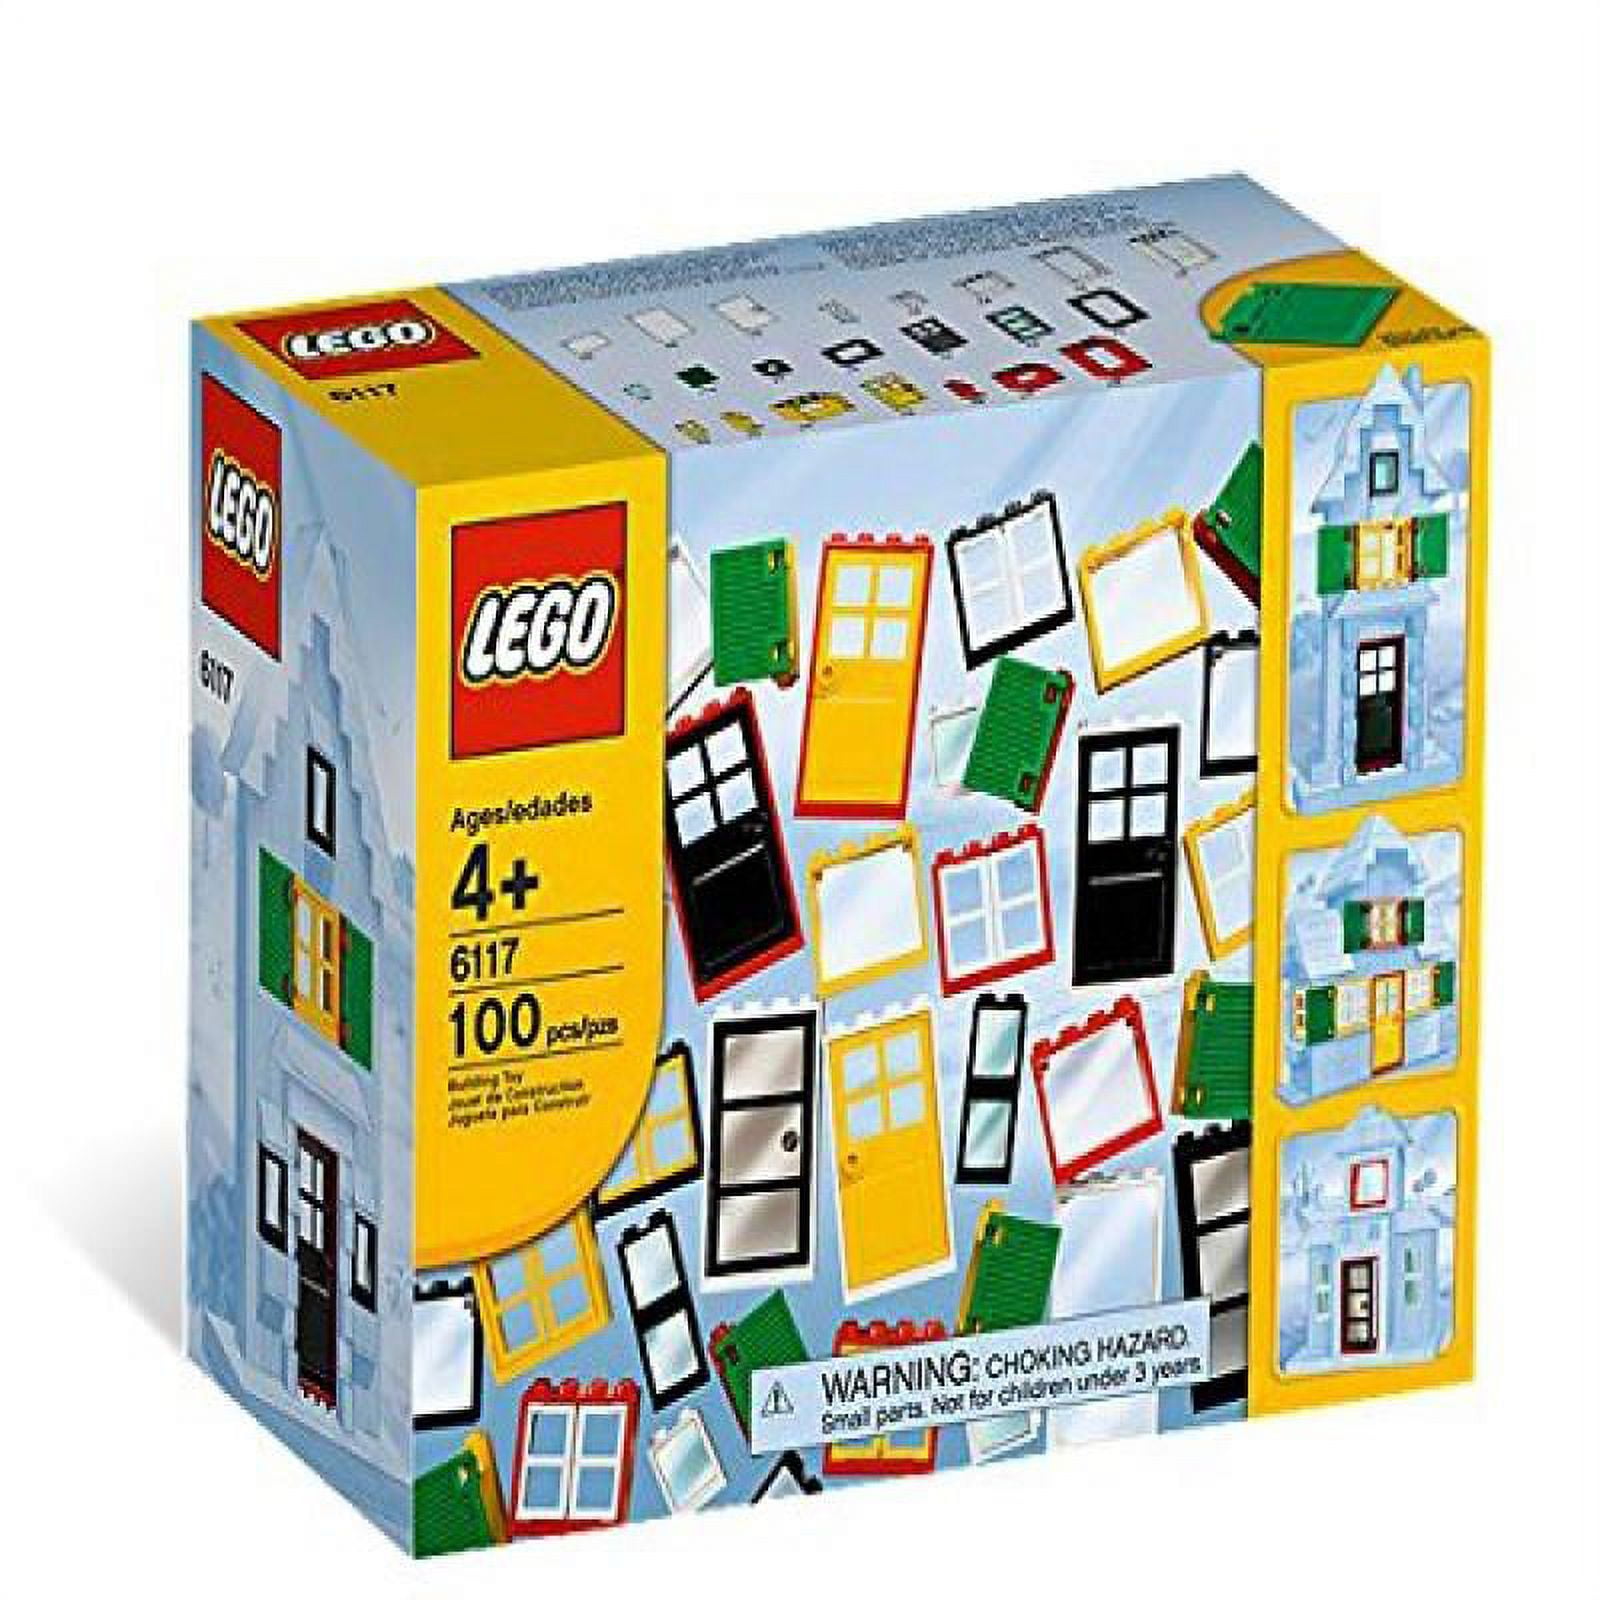 6112-1 LEGO World of Bricks - 1,000 Elements Reviews - Brick Insights